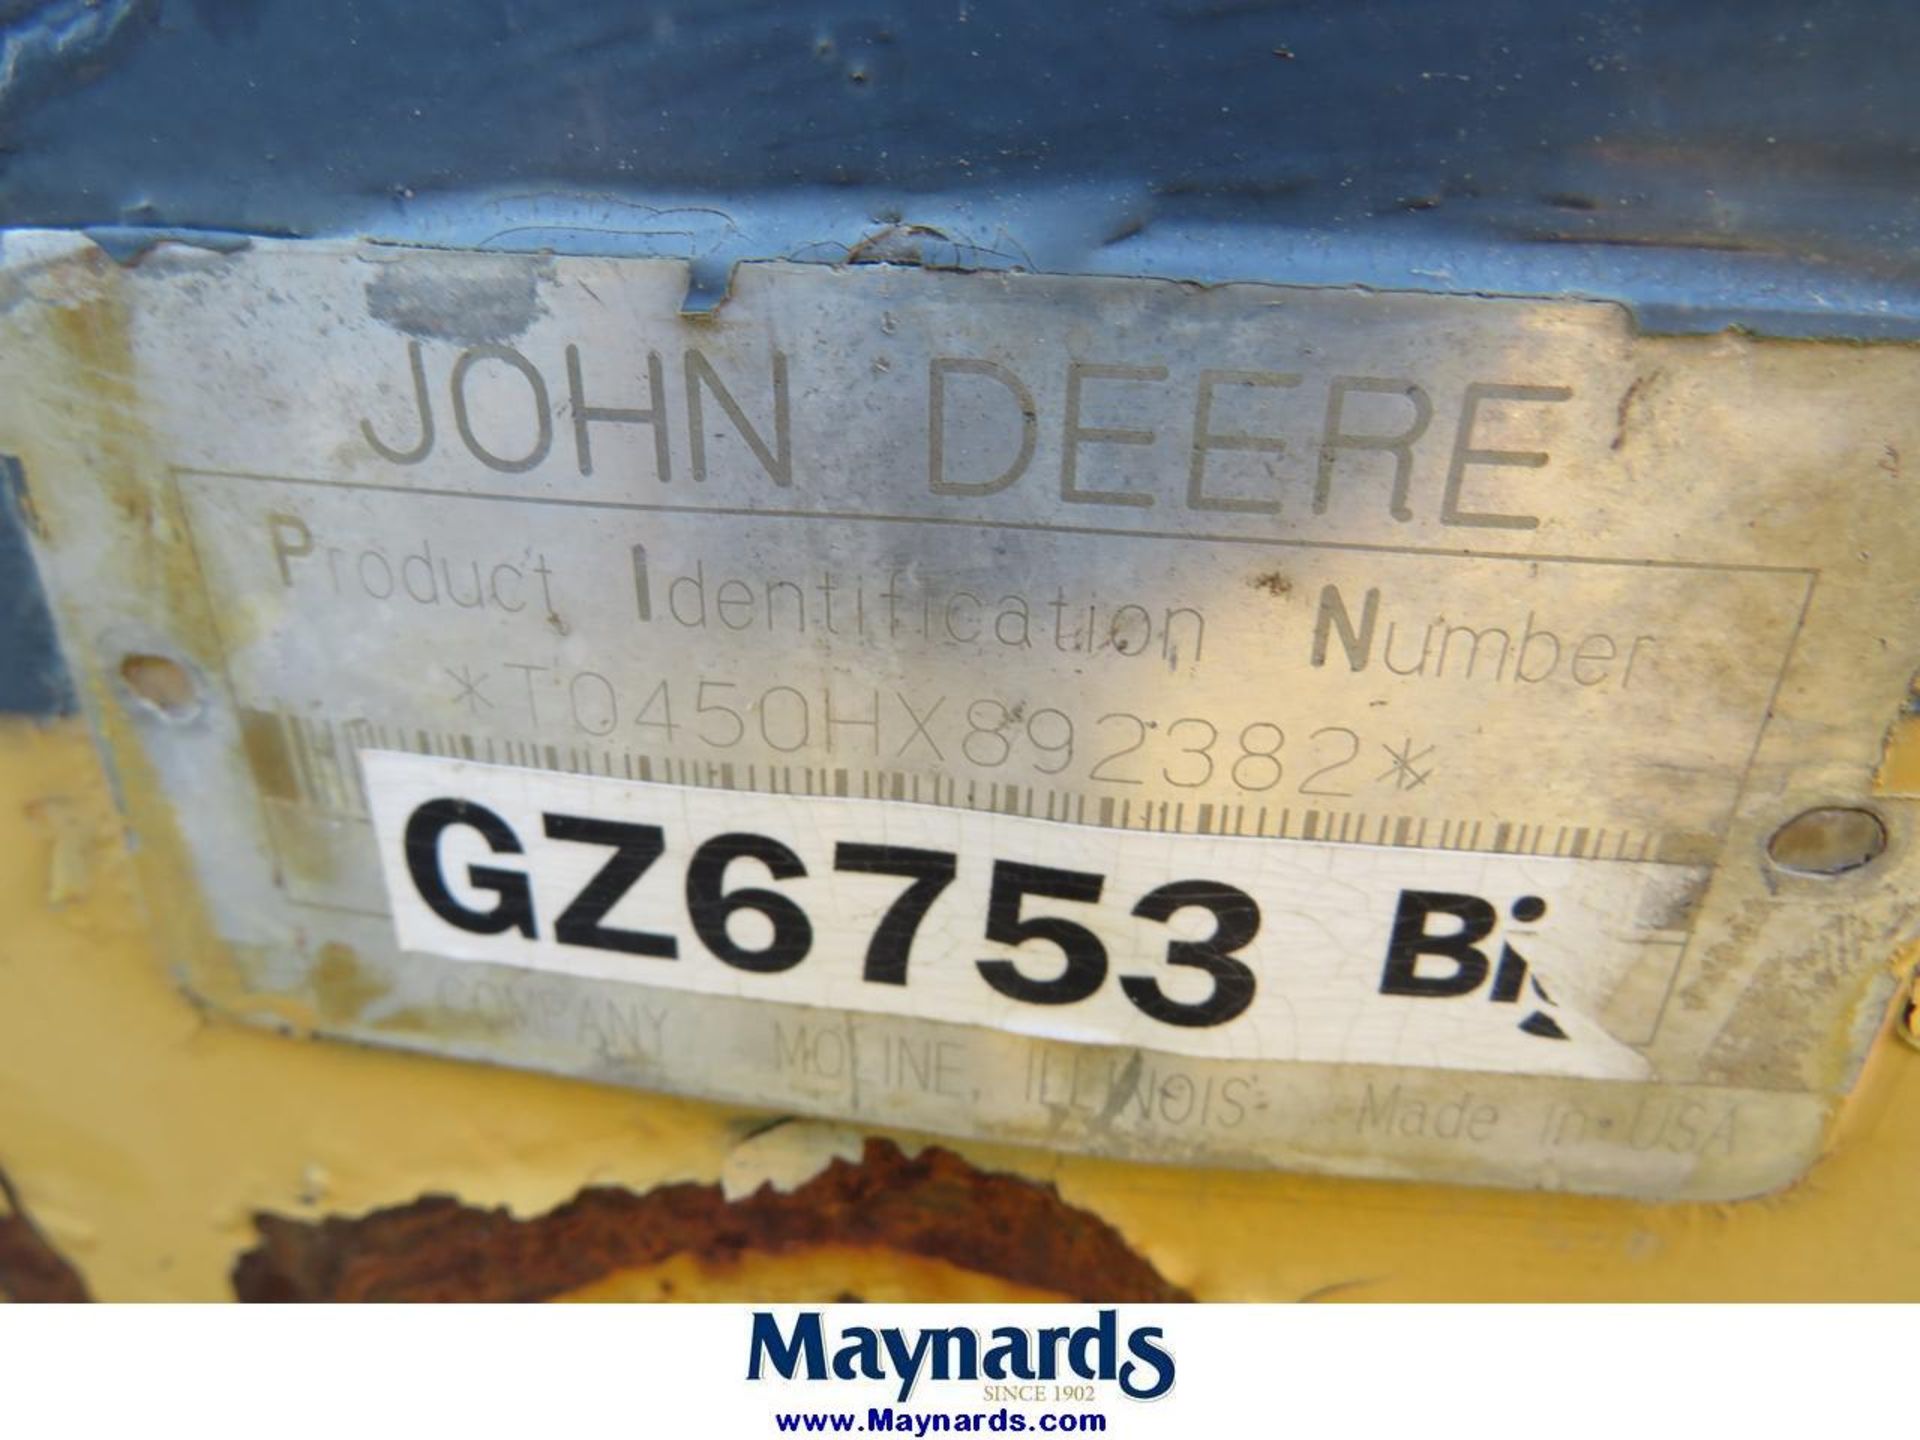 John Deere Track Dozer - Image 7 of 7